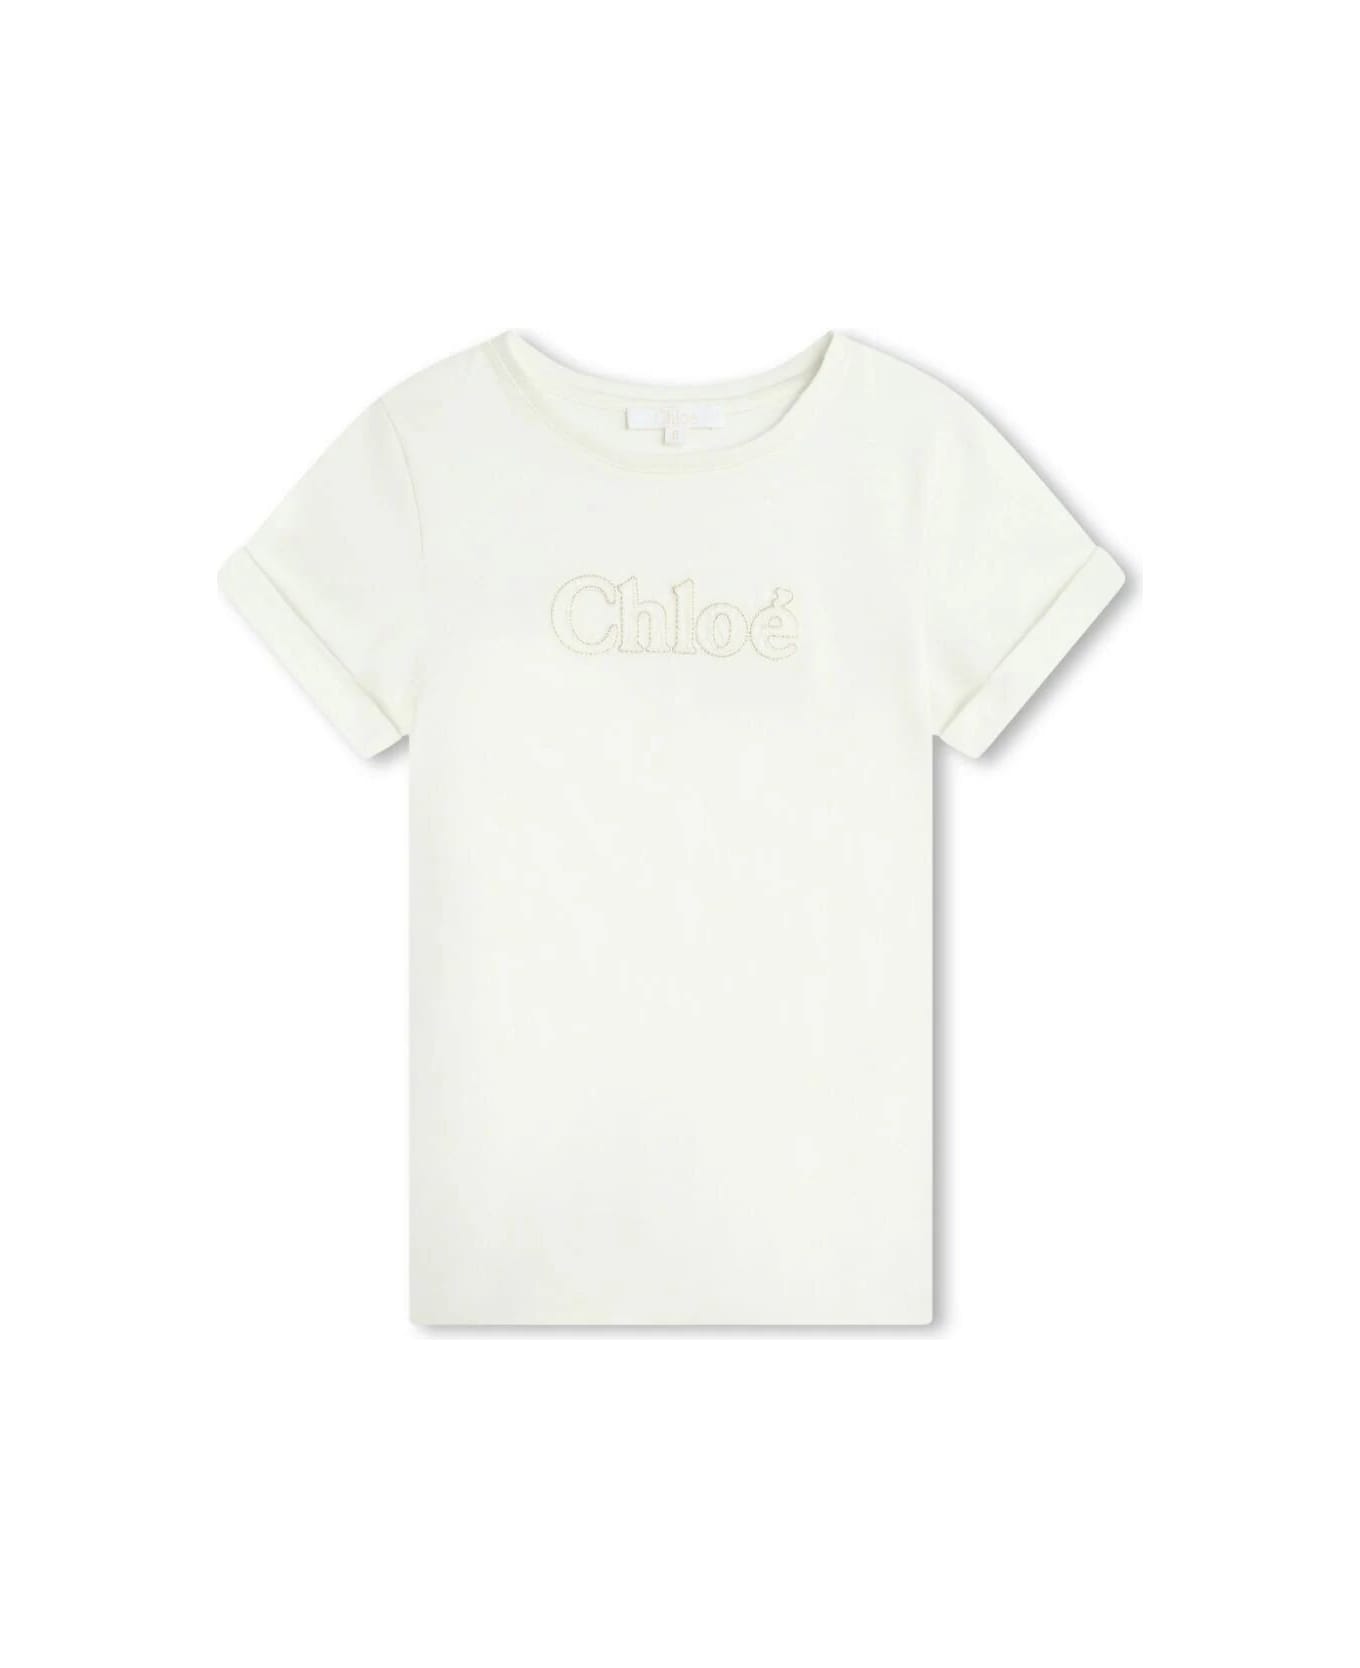 Chloé Short Sleeves T-shirt - White